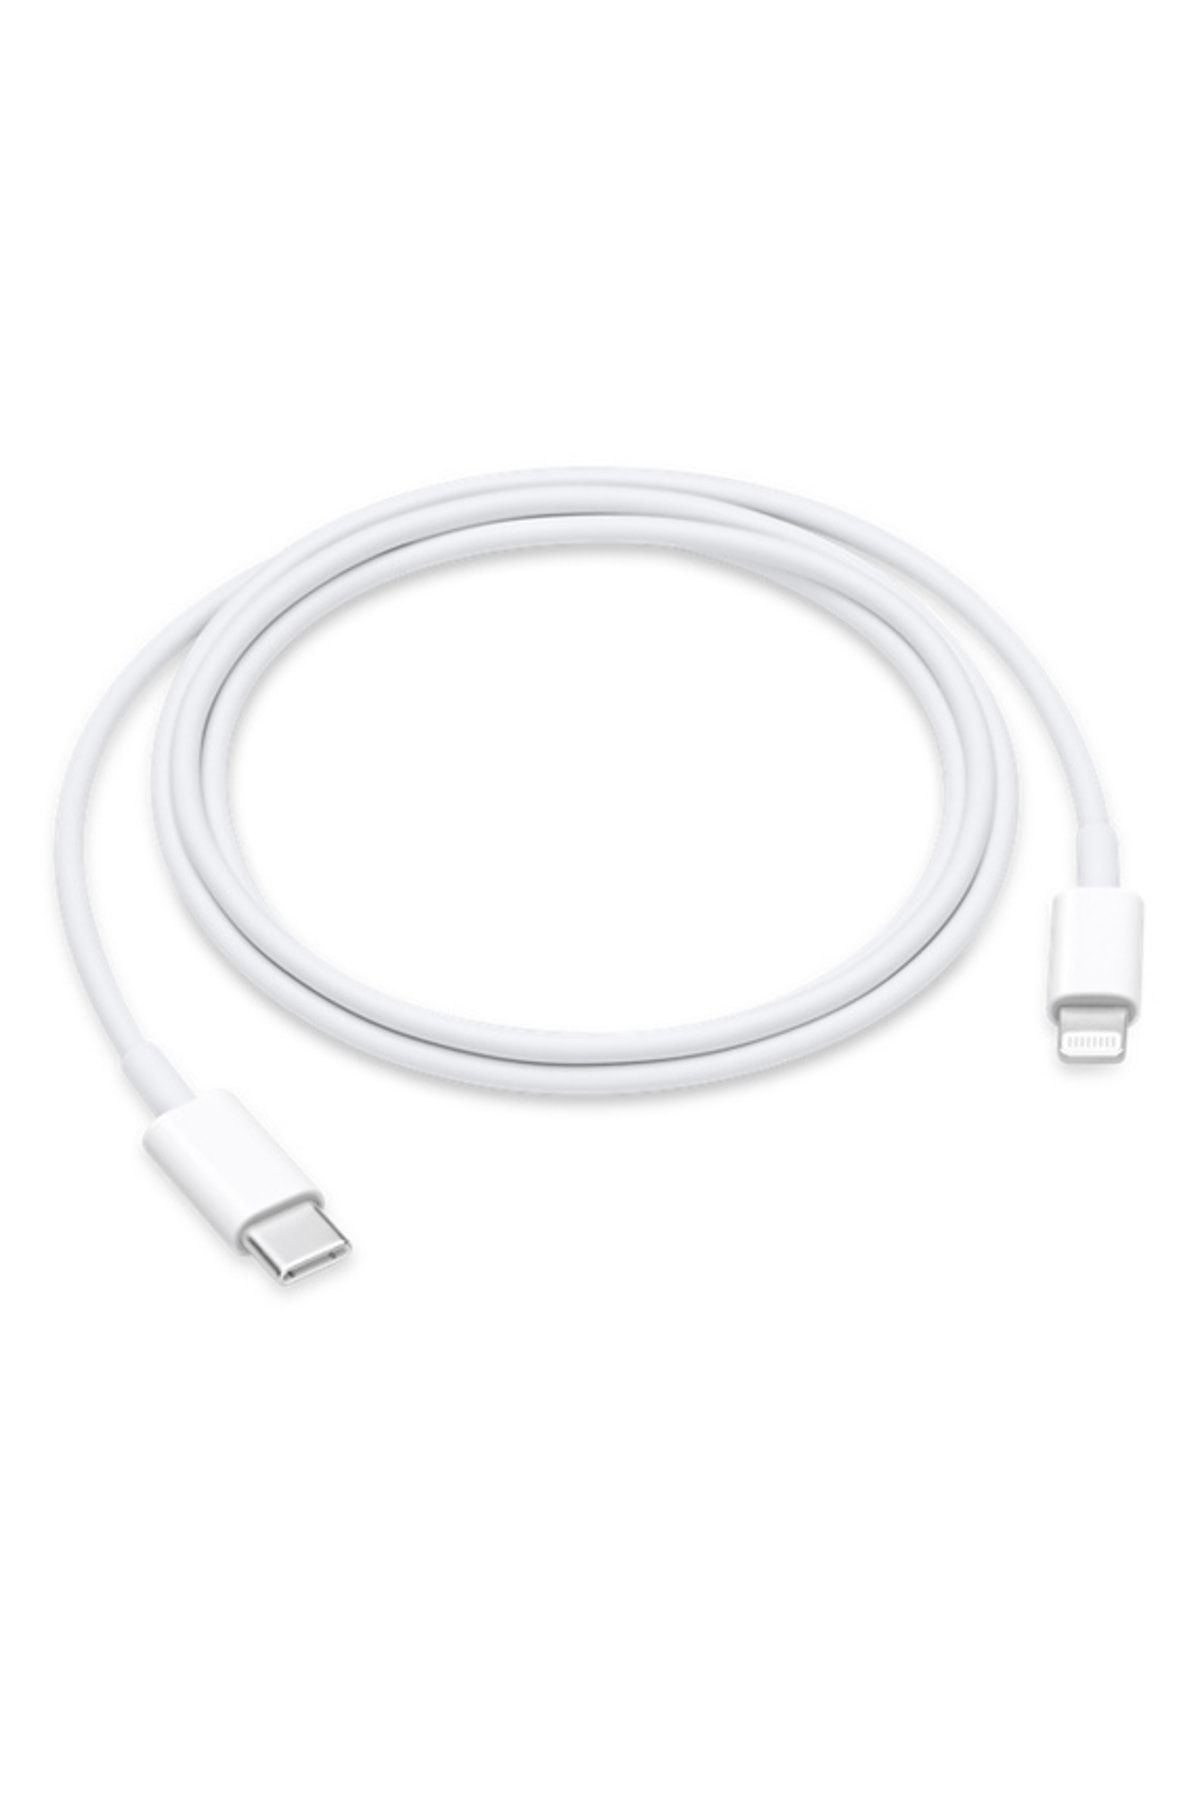 Apple Orjinal Apple Usb-c - Uyumlu Lightning Kablosu 1 m Mqgj2zm/a Barkodlu Garantili